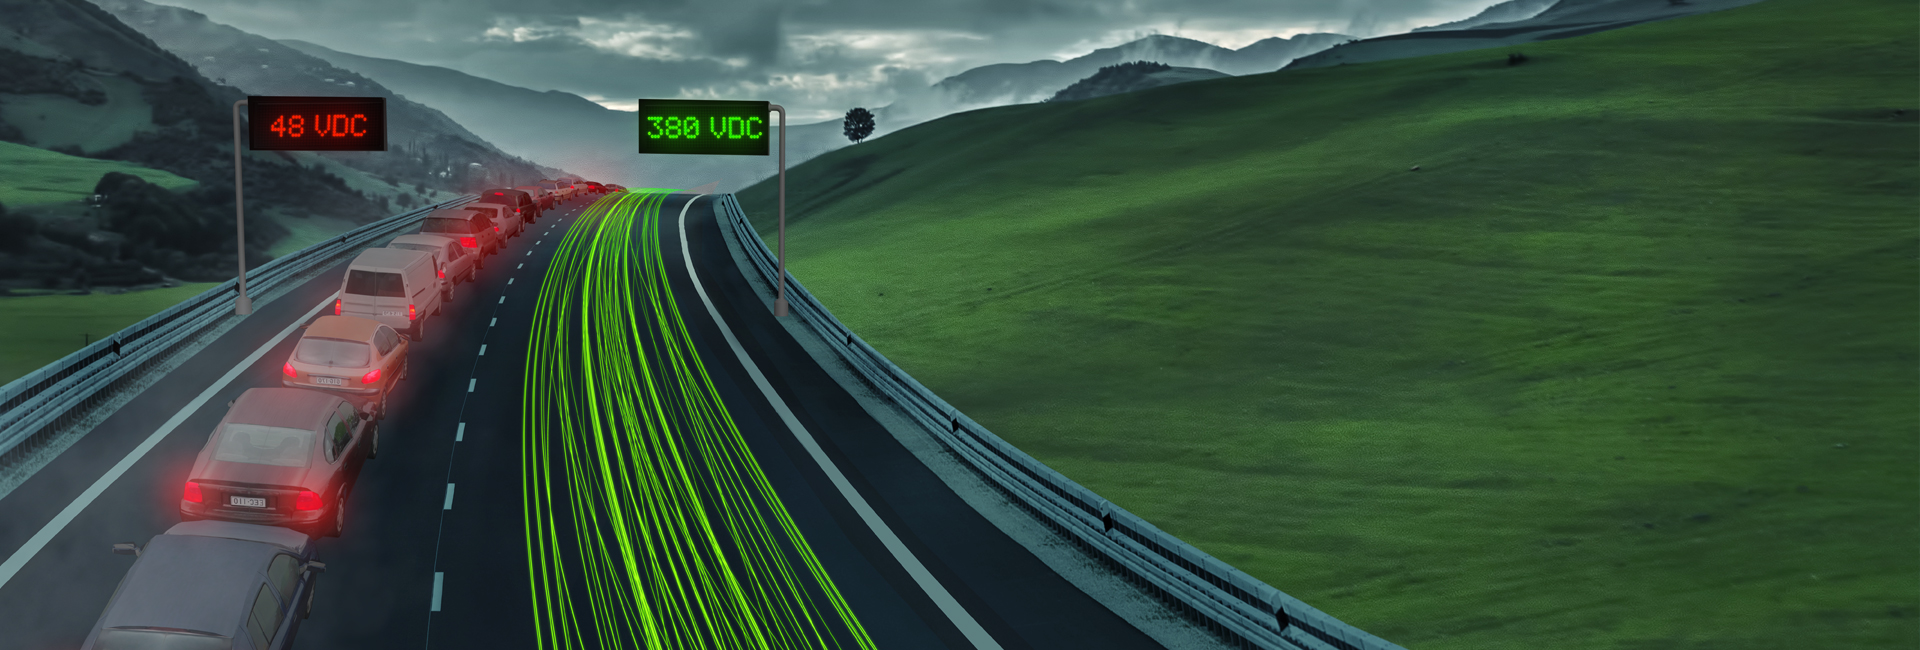 Take the fast lane to capacity expansion